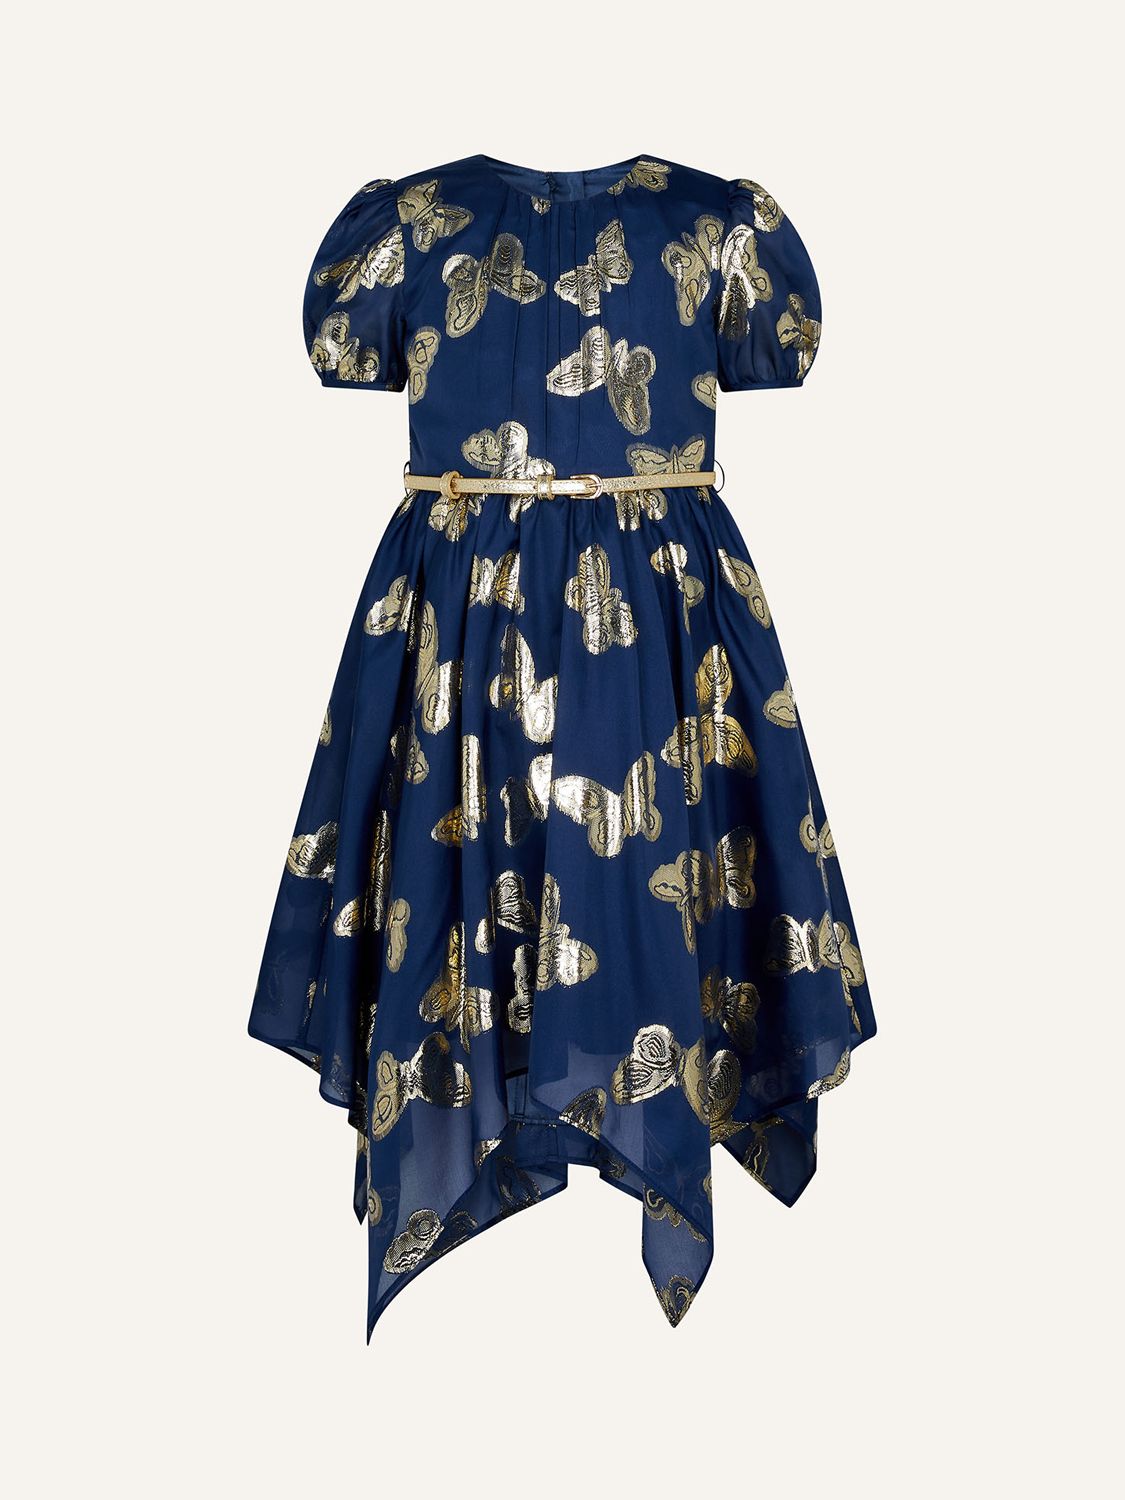 Monsoon Kids' Rosalie Butterfly Dress, Navy/Gold